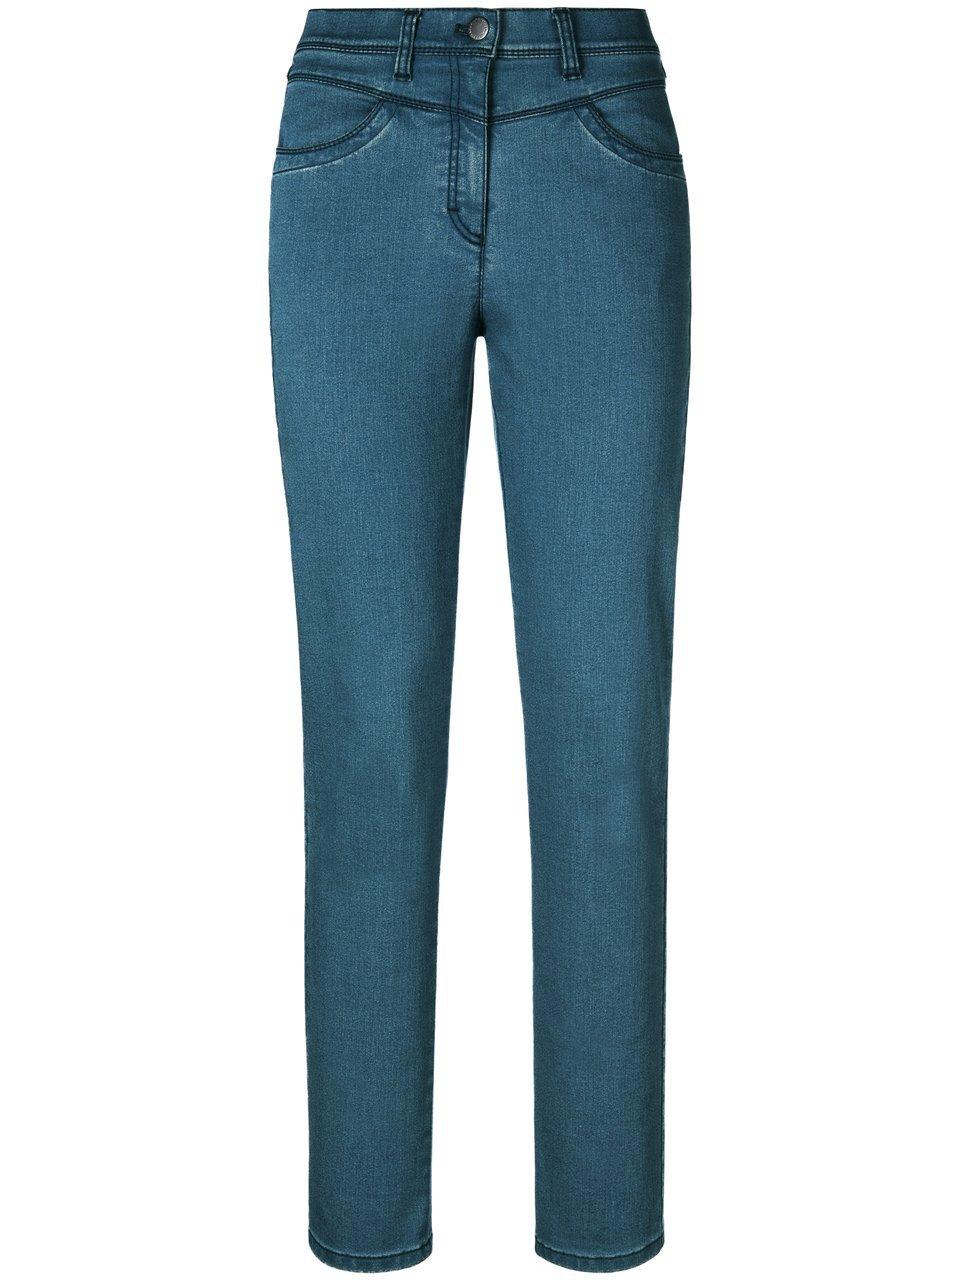 Super Slim -Thermolite-jeans model Laura New Van Raphaela by Brax denim